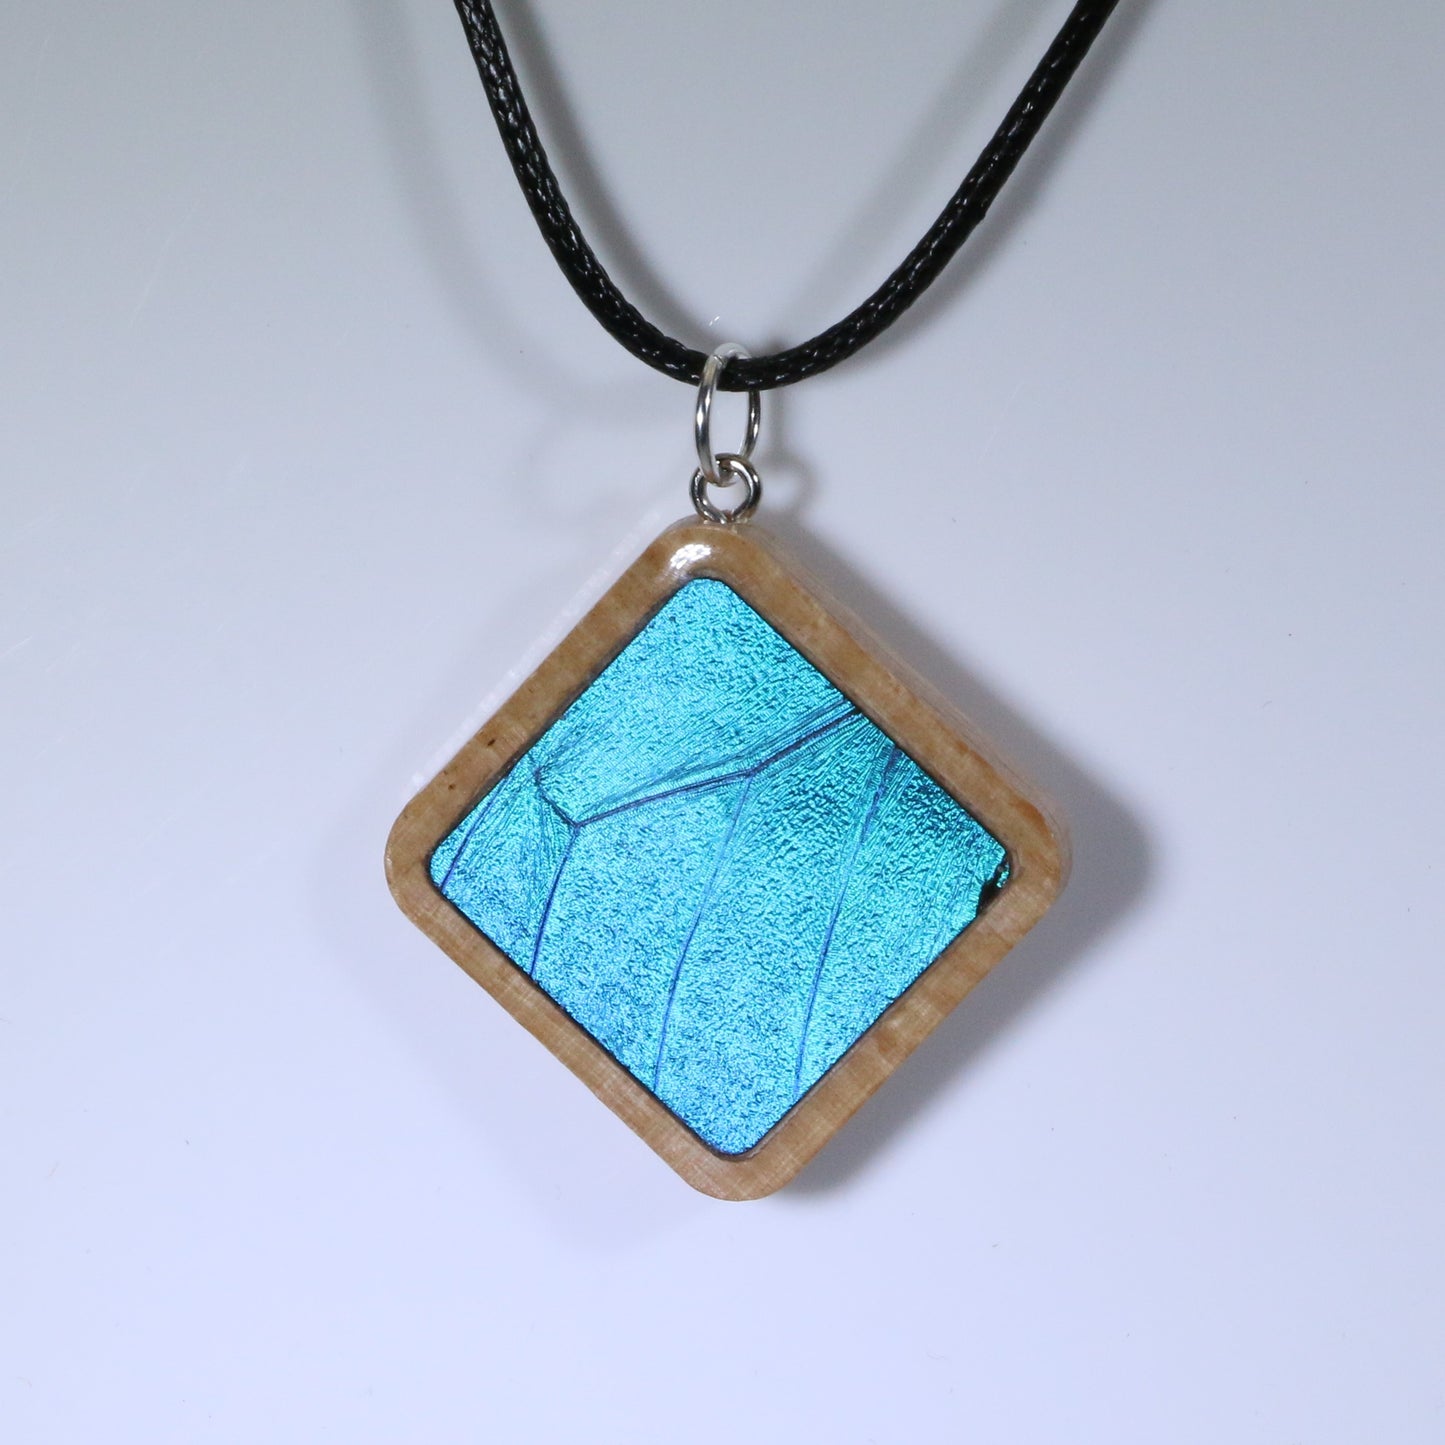 52901 - Real Butterfly Wing Jewelry - Pendant - Tan Wood - Large - Diamond Shape - Blue Morpho